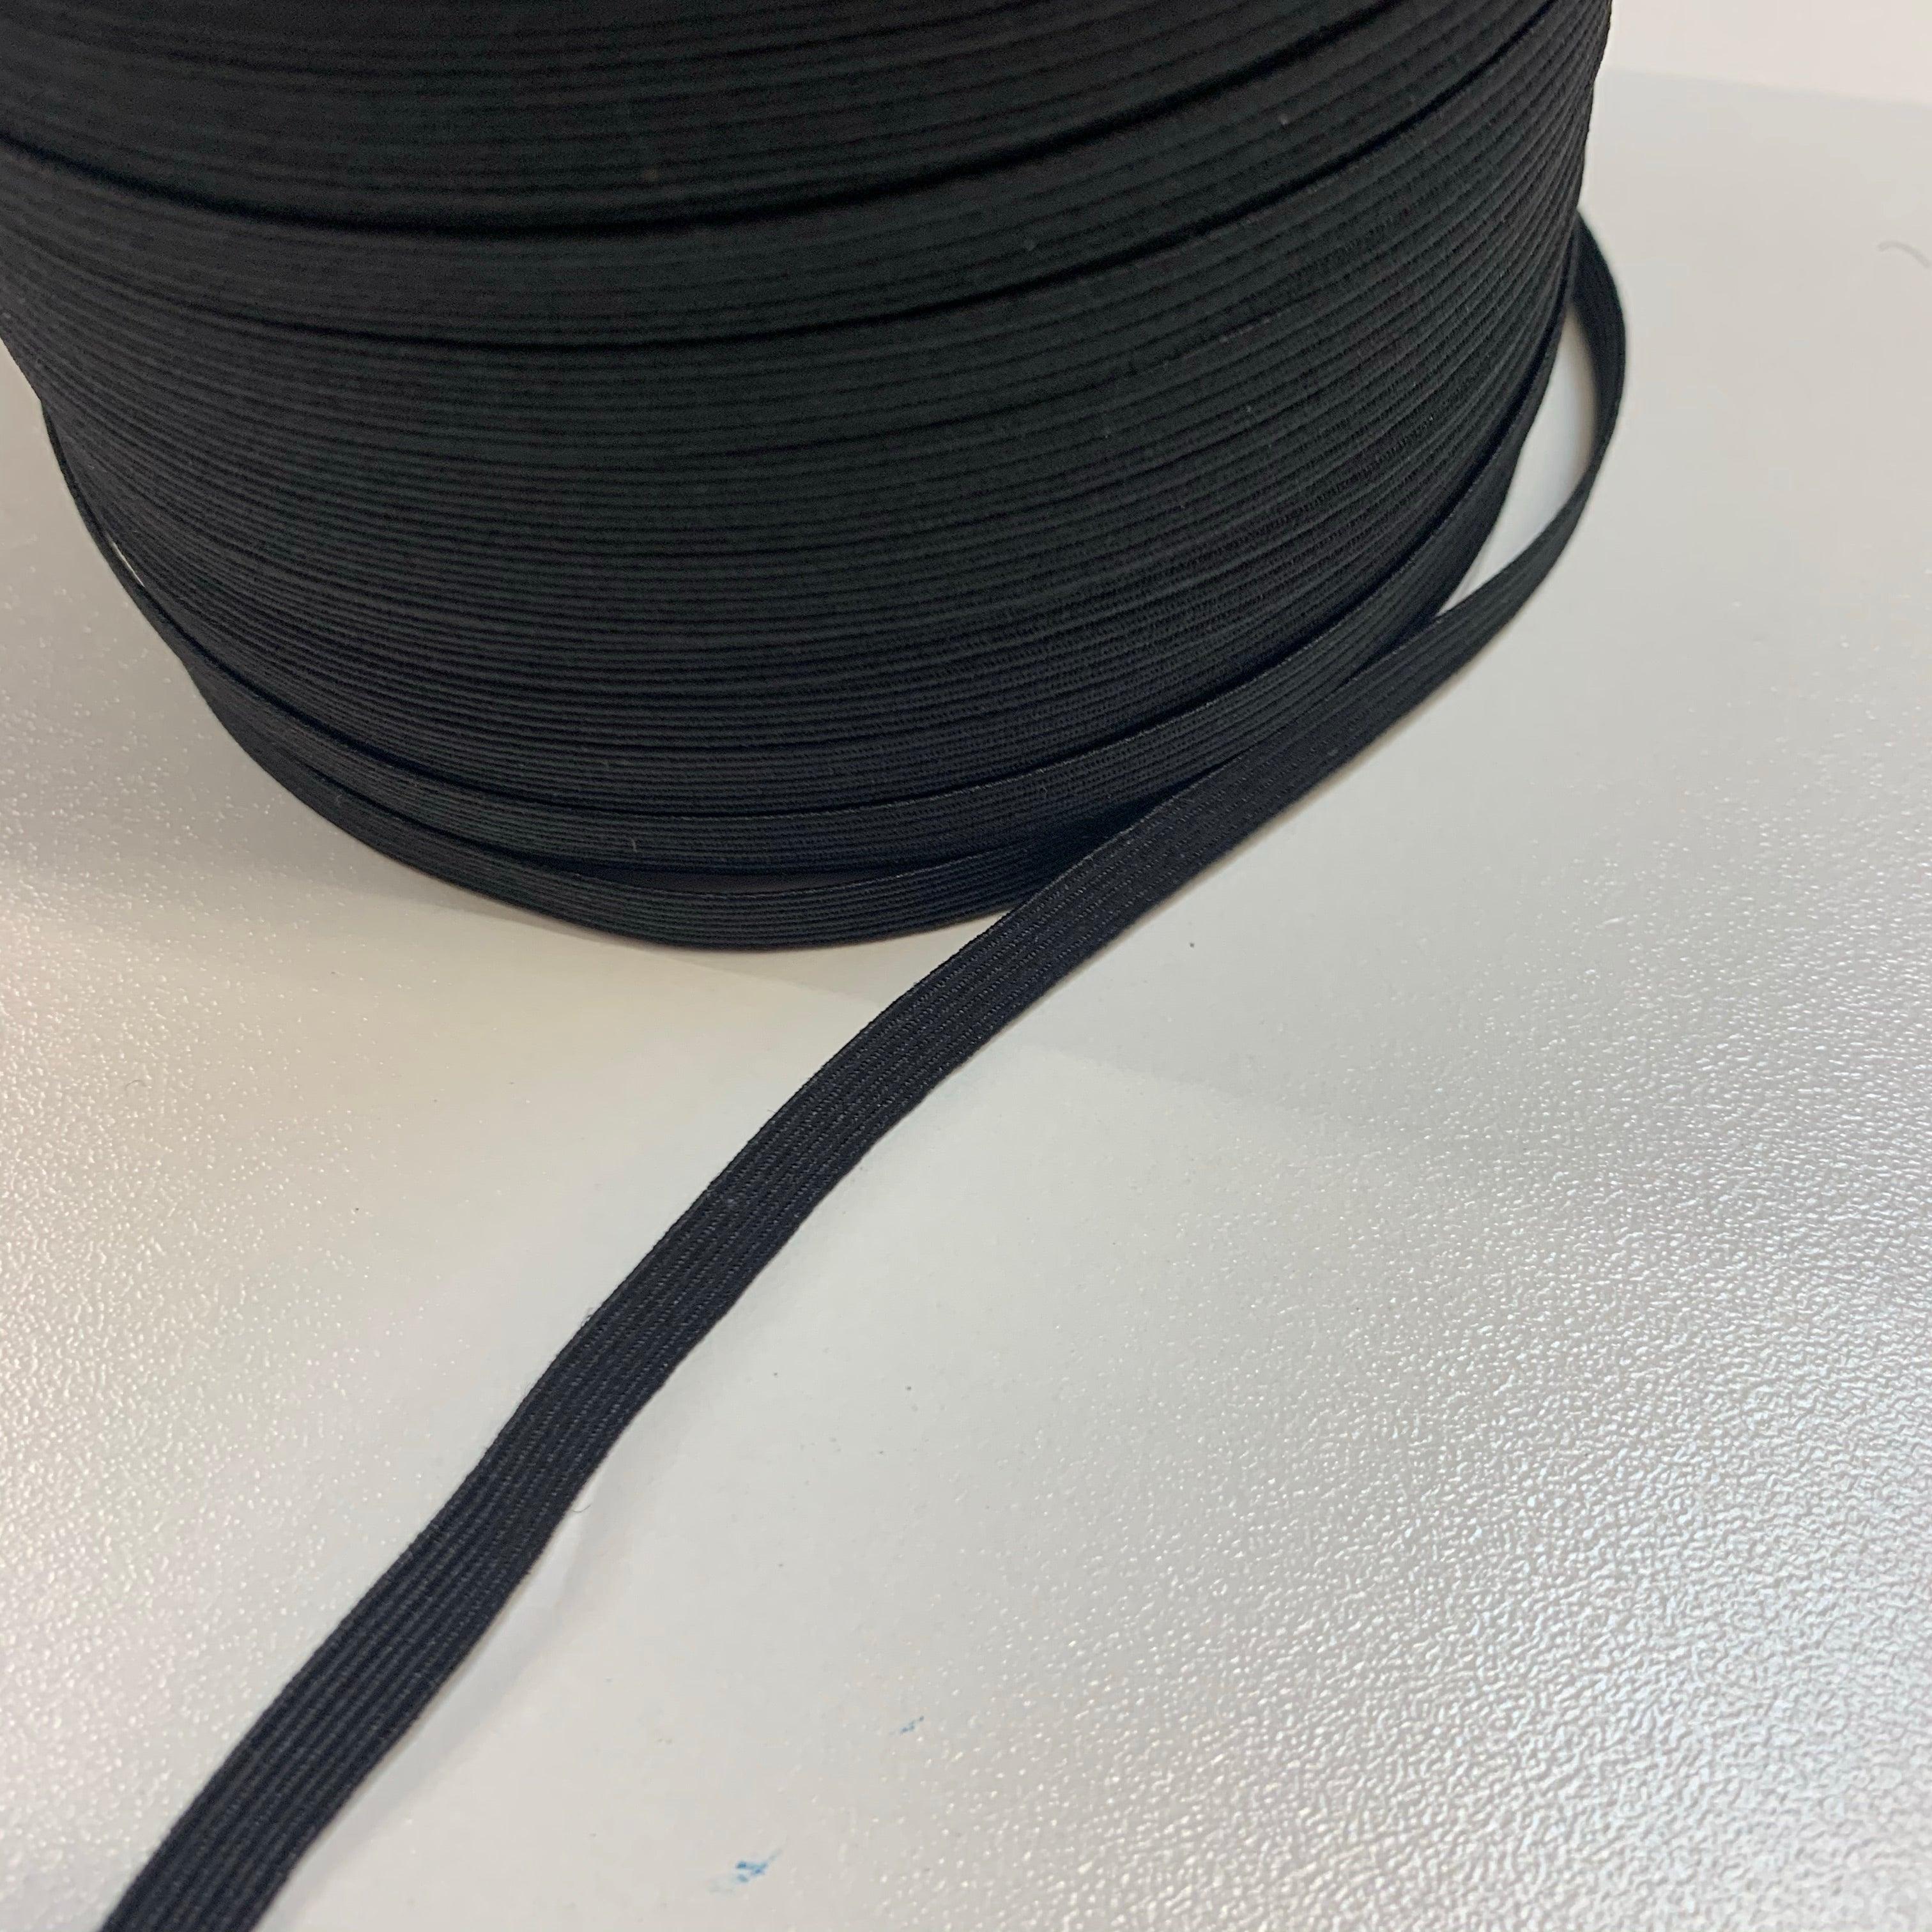 6mm / 8 cord elastic - Black or White